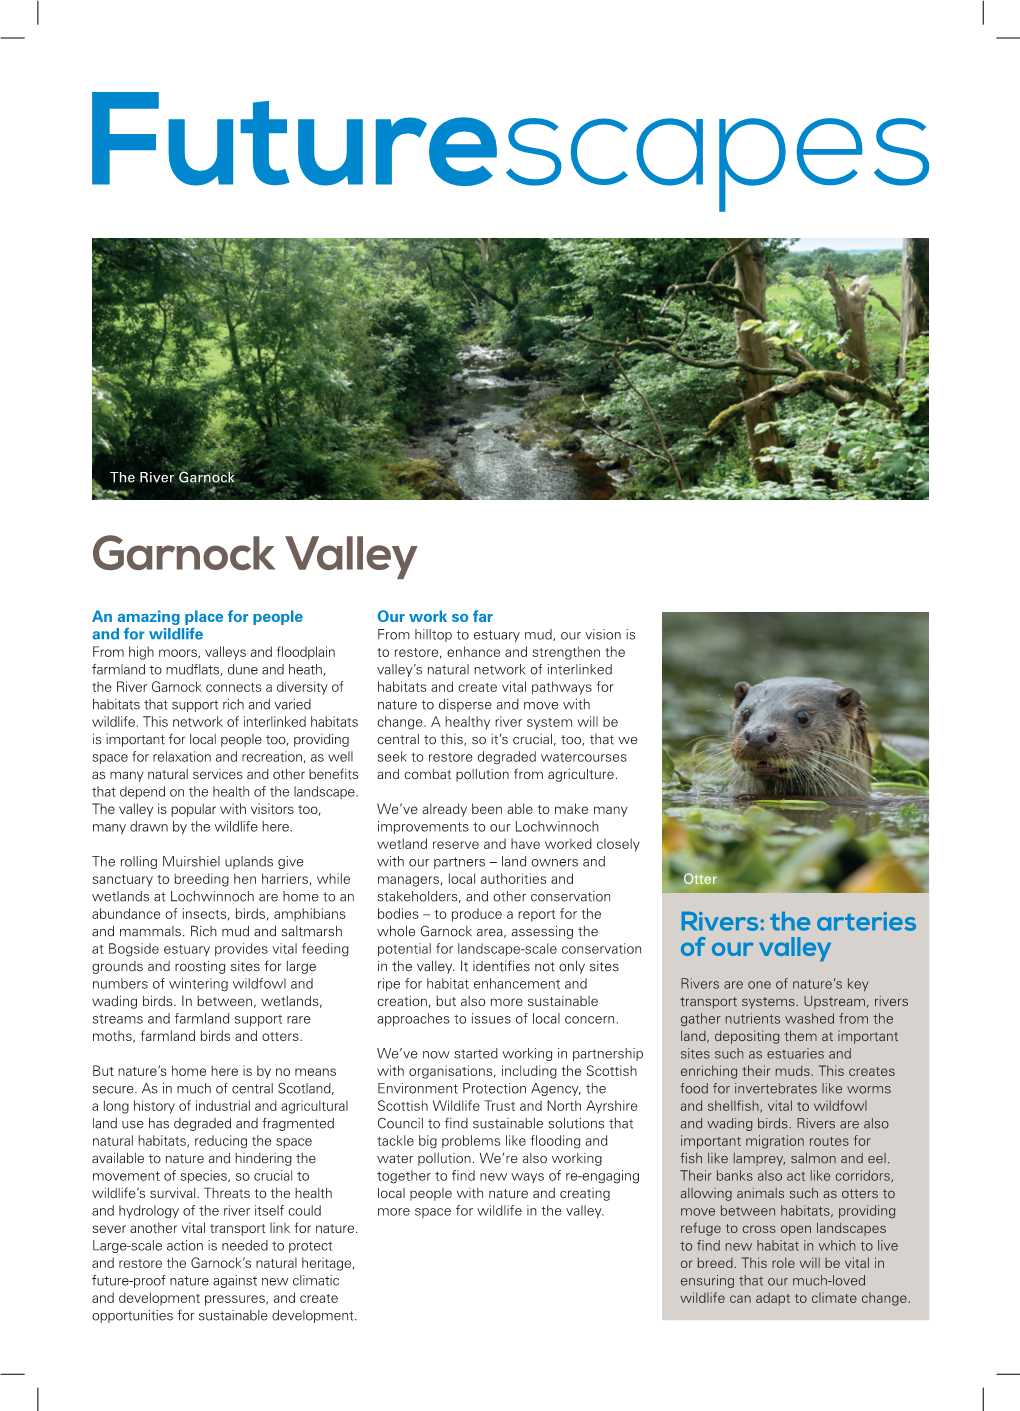 Garnock Valley